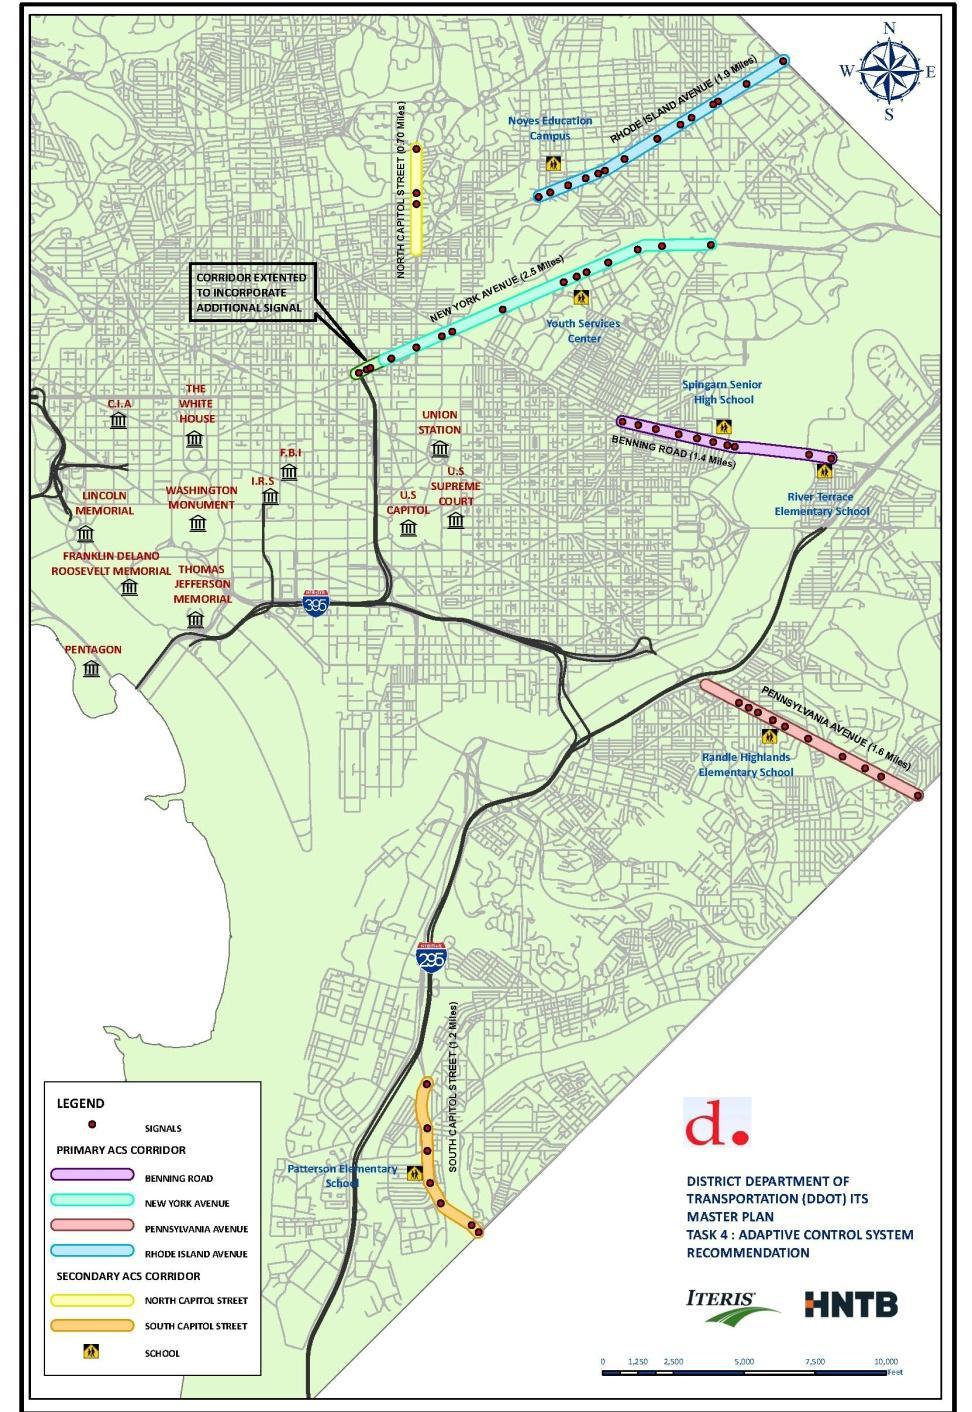 Washington DC - Adaptive Corridor Selection 6 corridors evaluated Selected 3 for pilot project